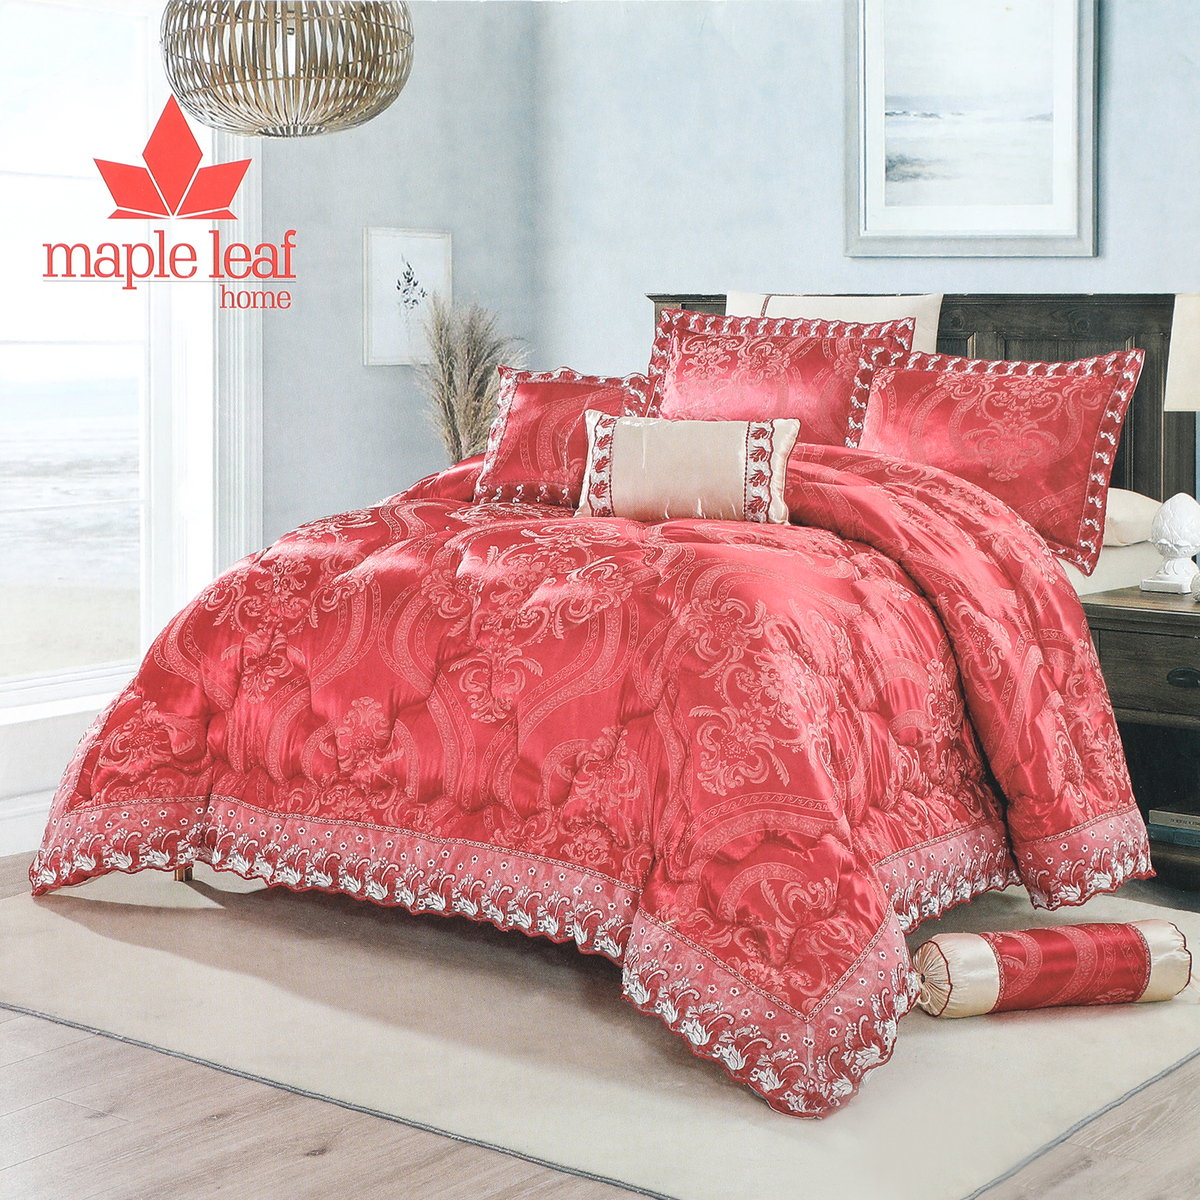 Maple Leaf Comforter King 9pcs Set 240x260cm Assorted